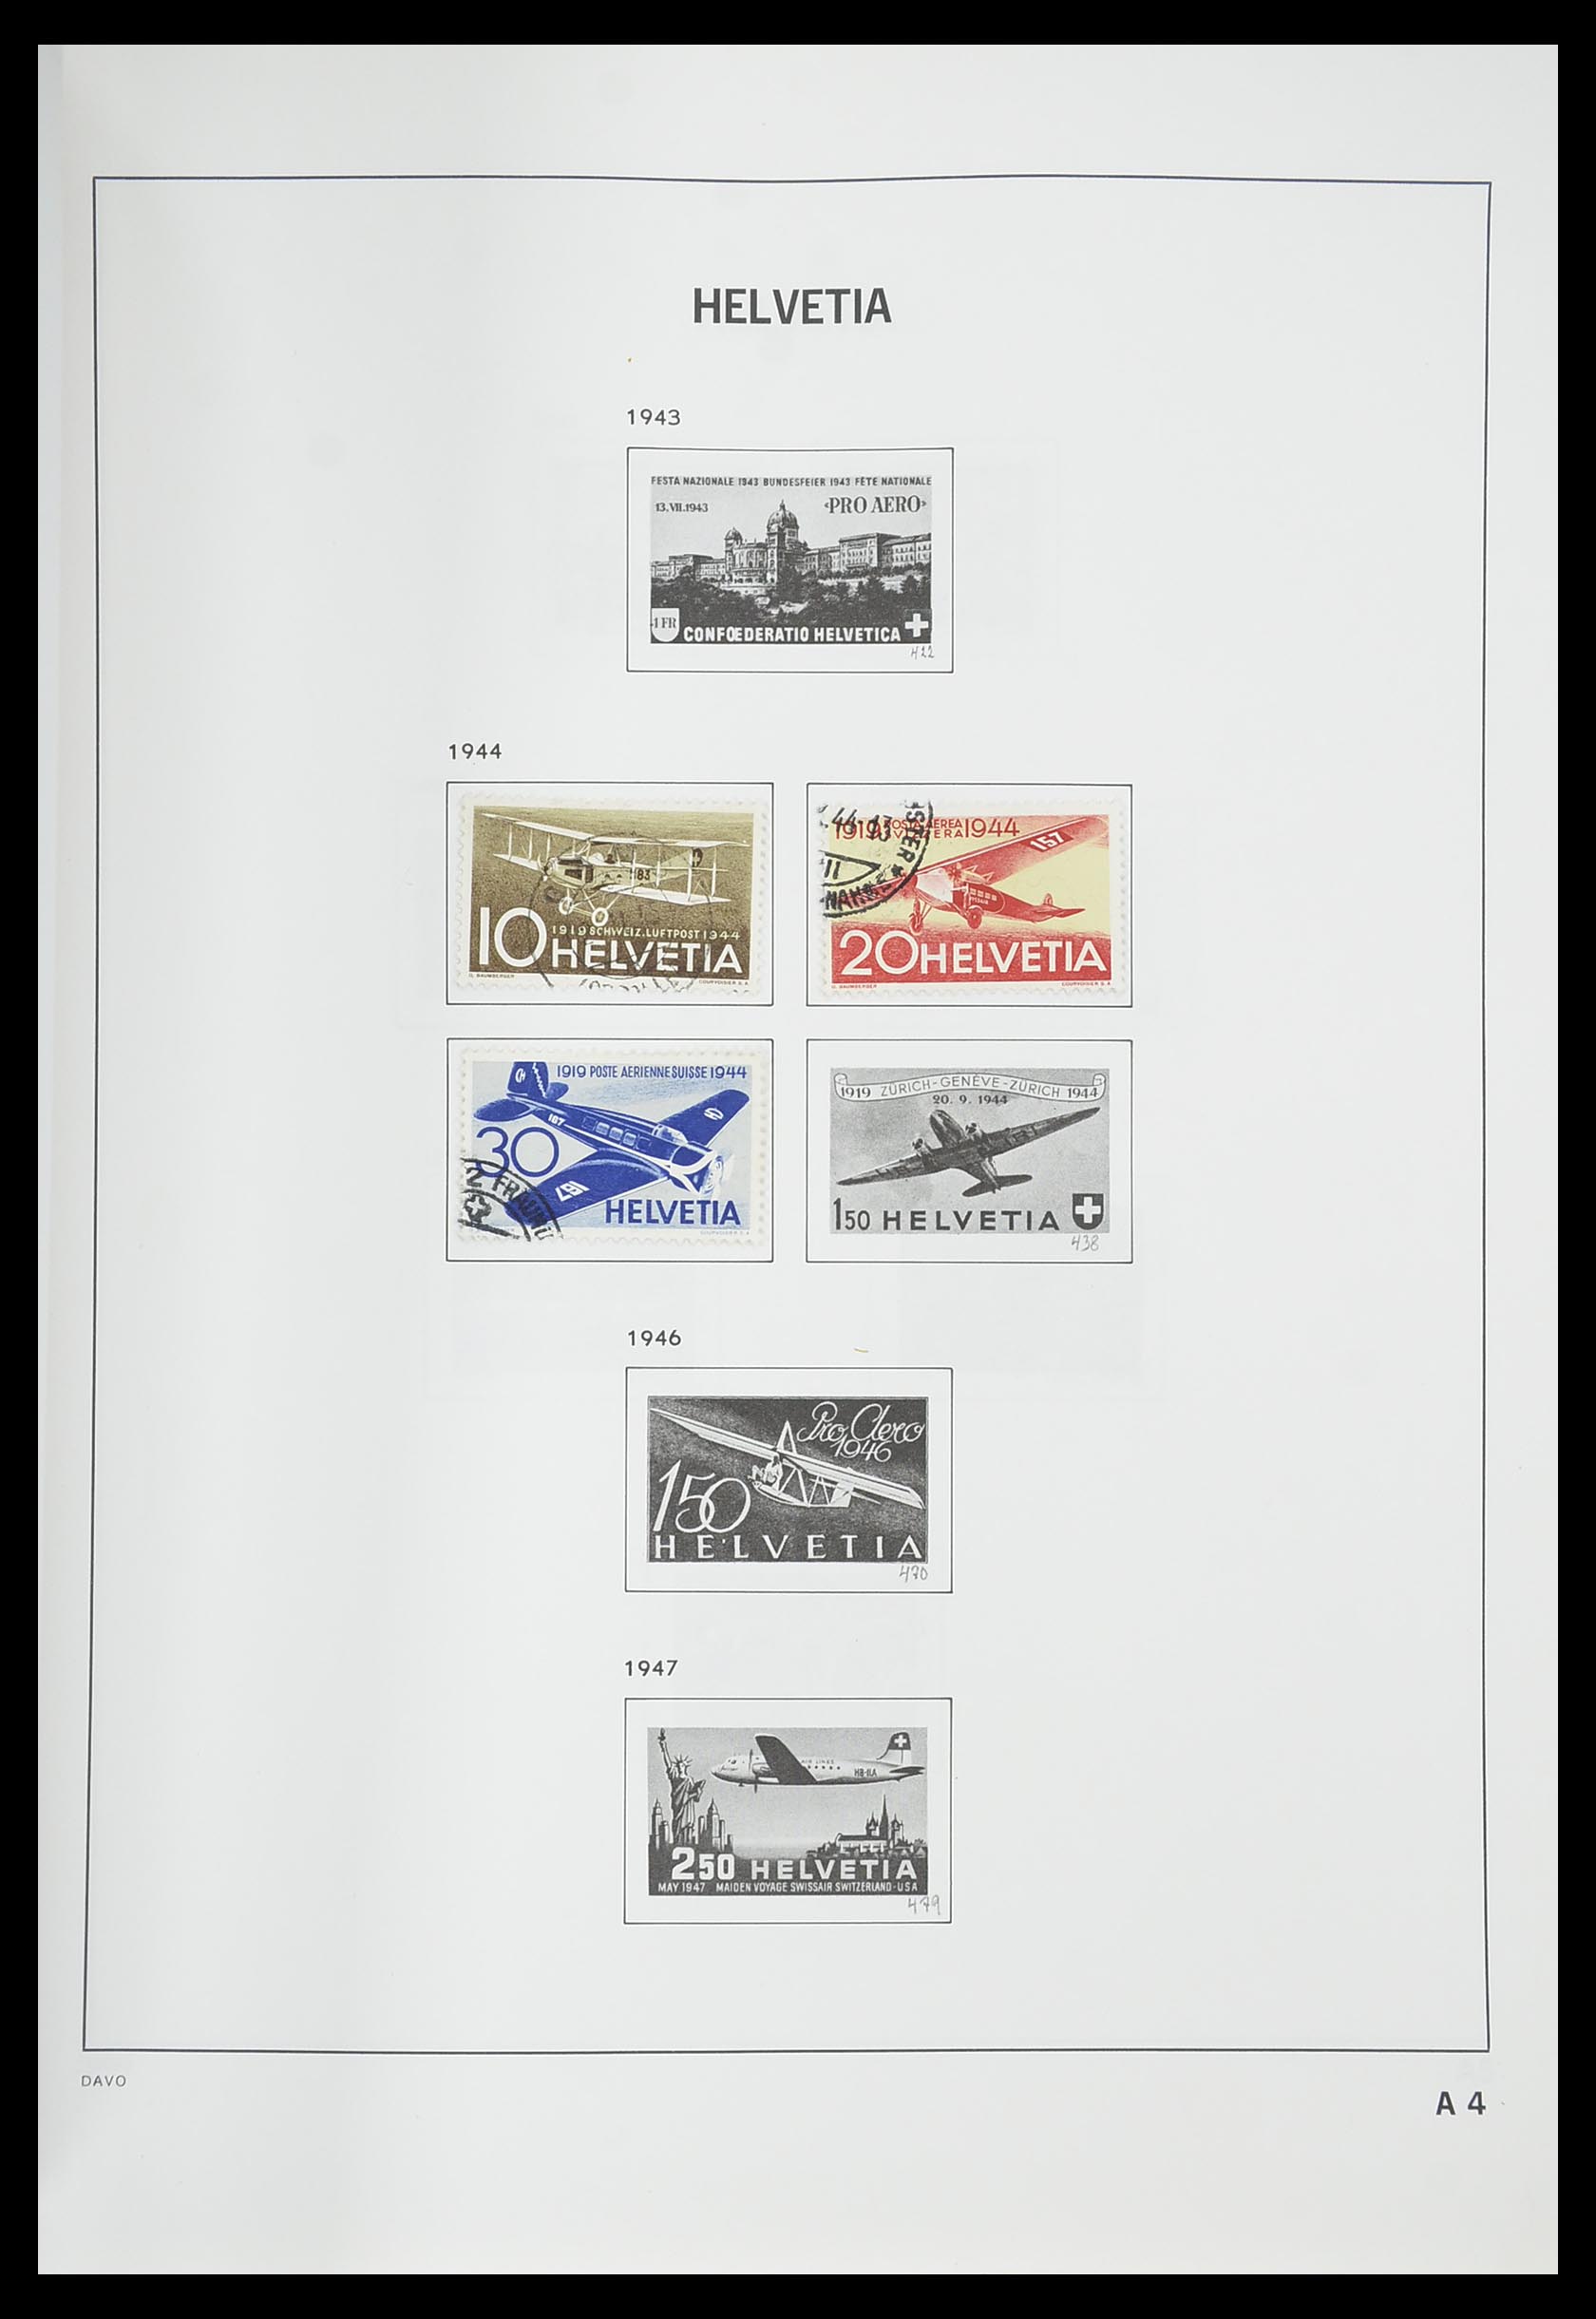 33559 132 - Stamp collection 33559 Switzerland 1850-2000.